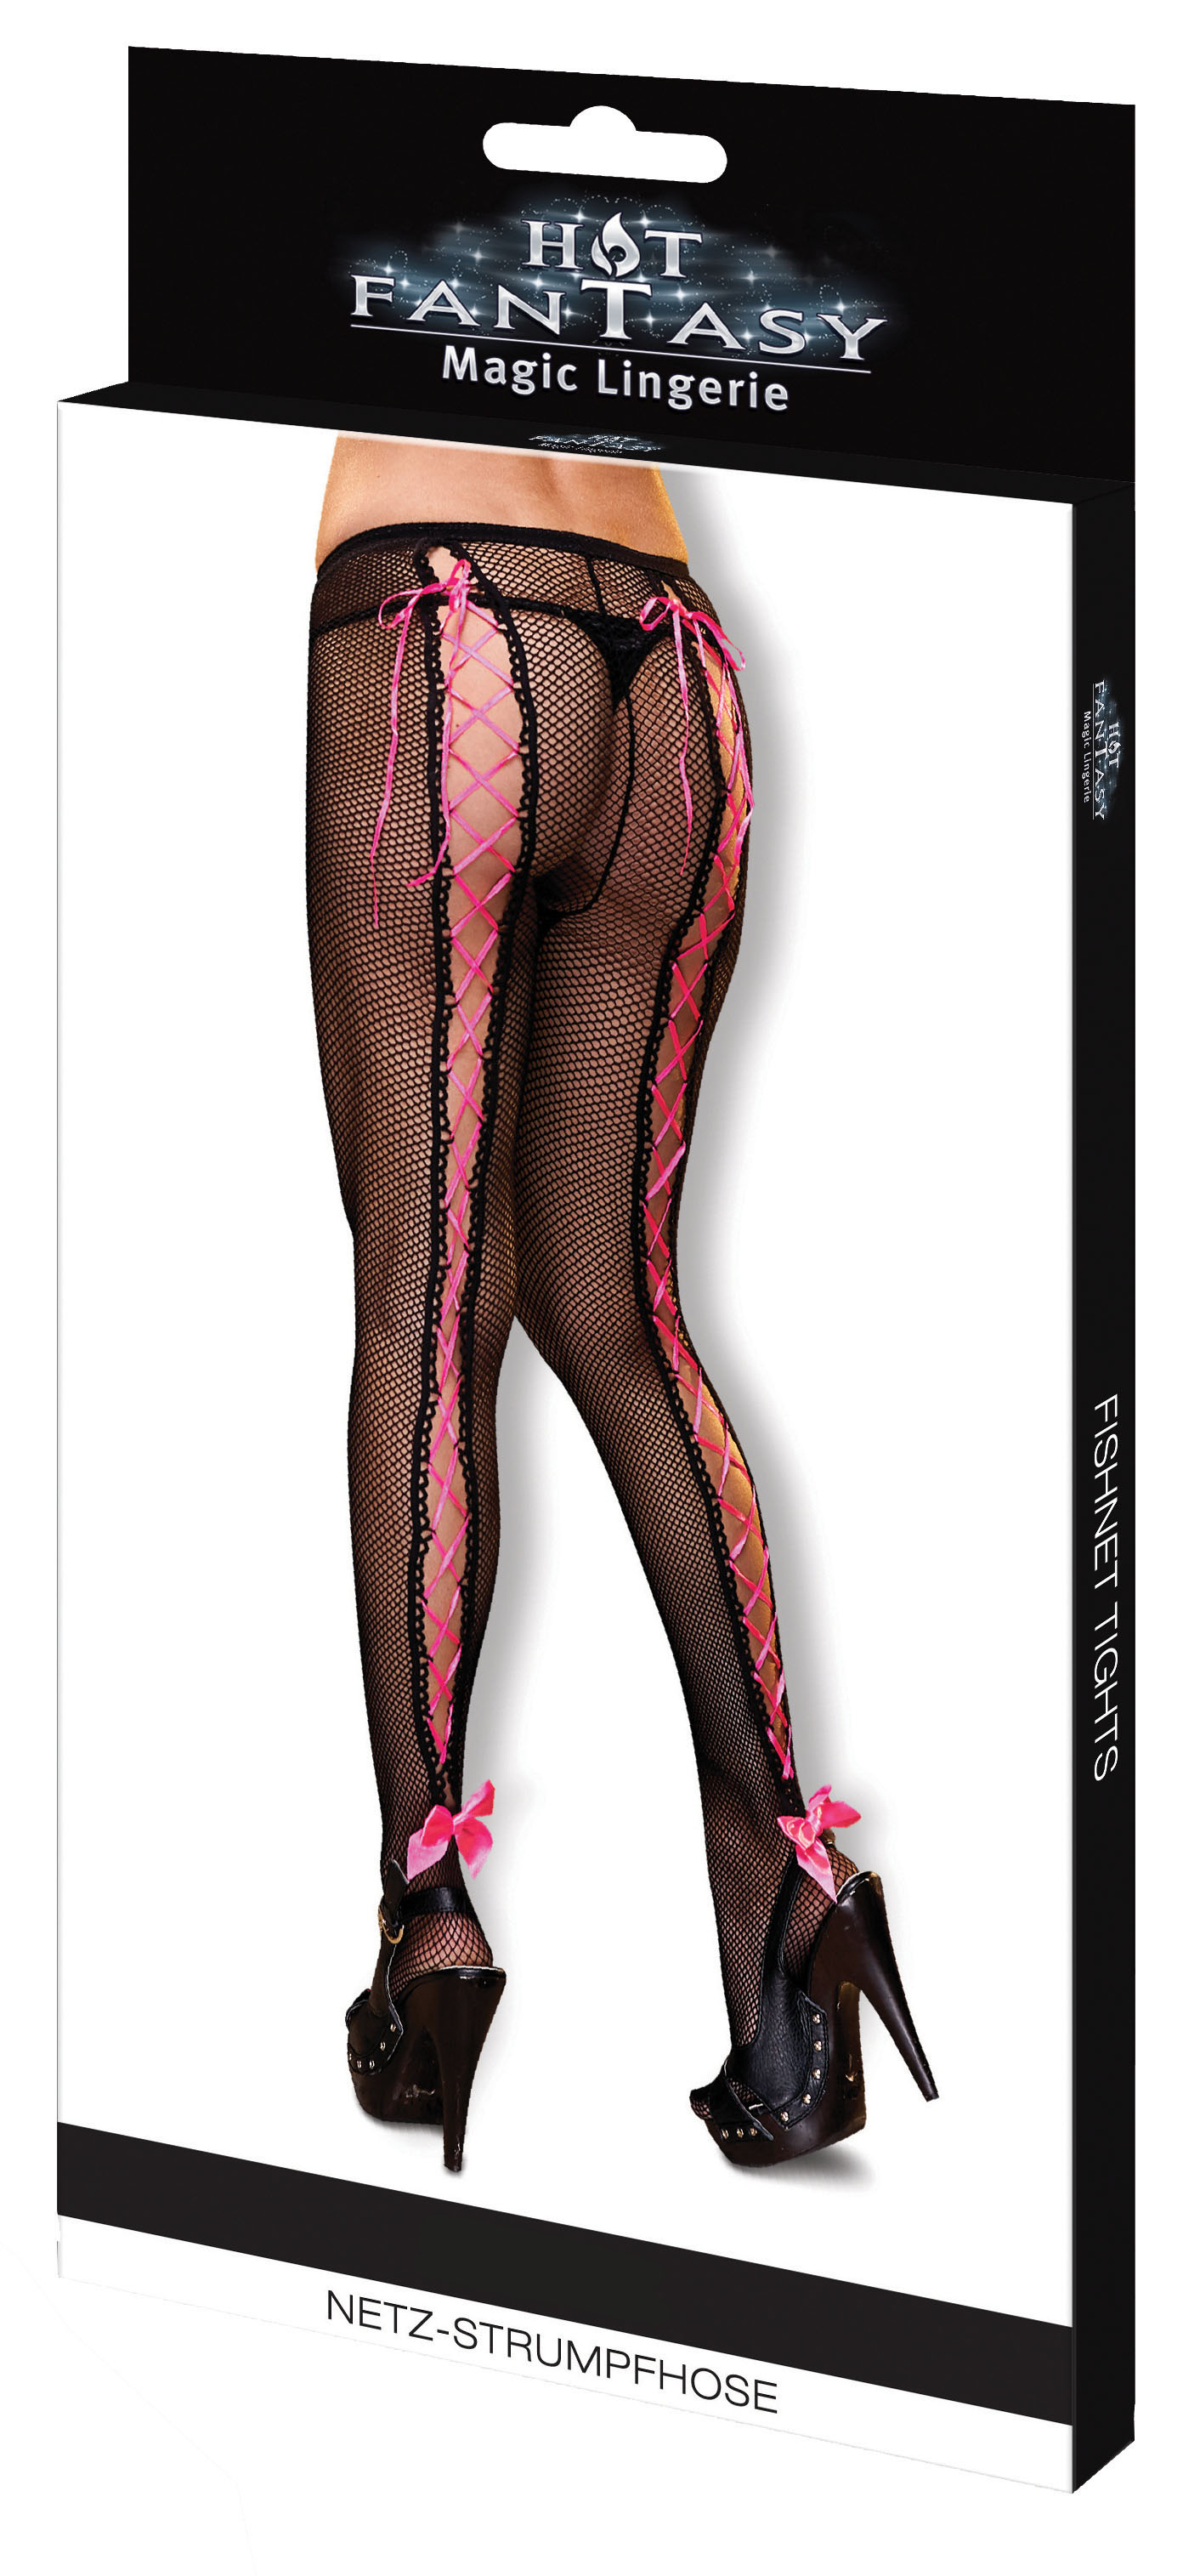 HOT FANTASY Stockings Netz-Strumpfhose schwarz-pink